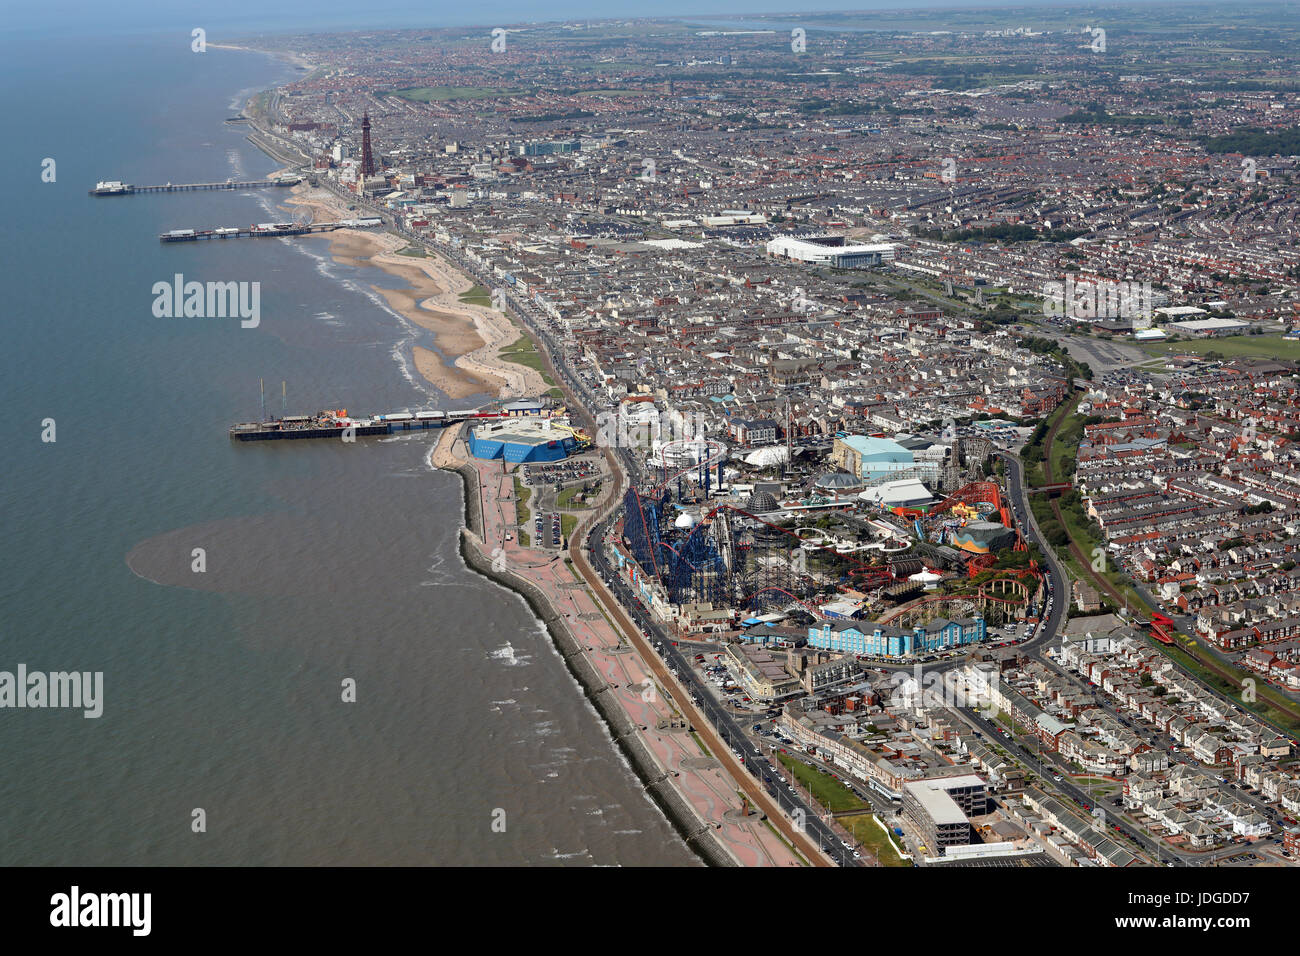 aerial view of the Blackpool coastline, UK Stock Photo